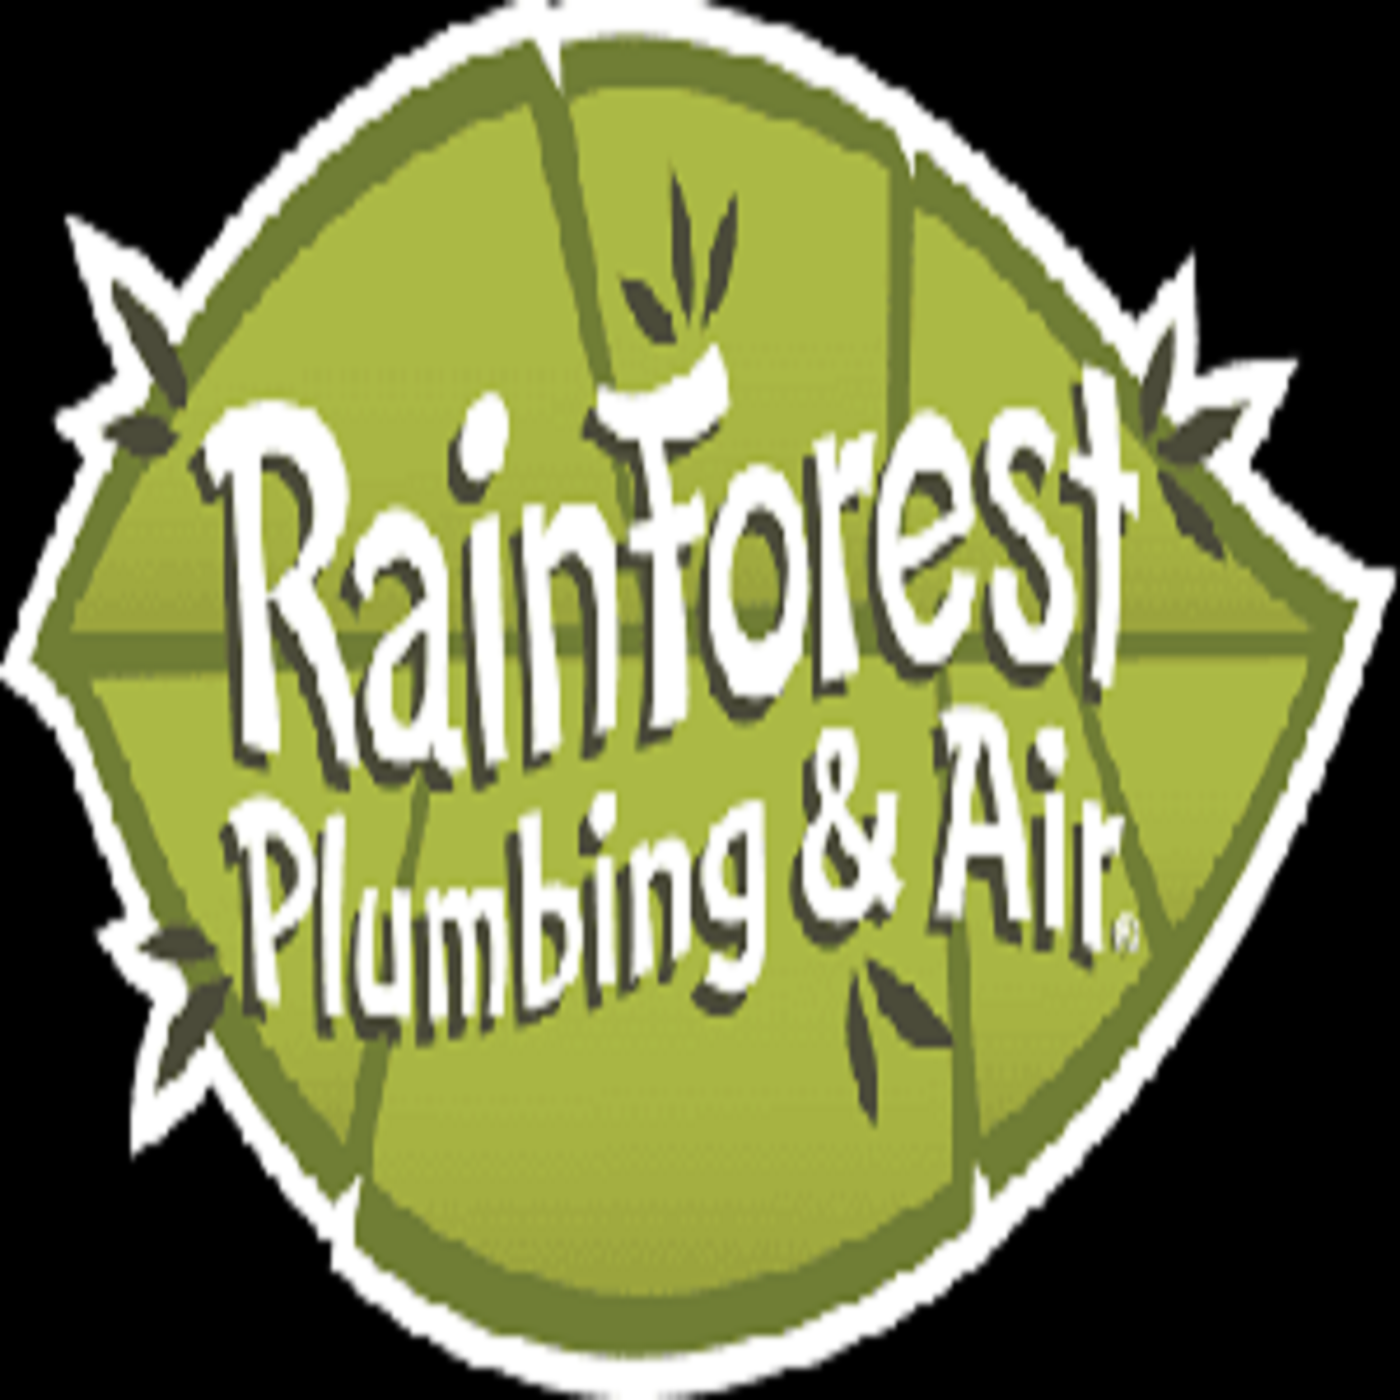 Rainforest  Plumbing And Air (rainforestplumbingandair)